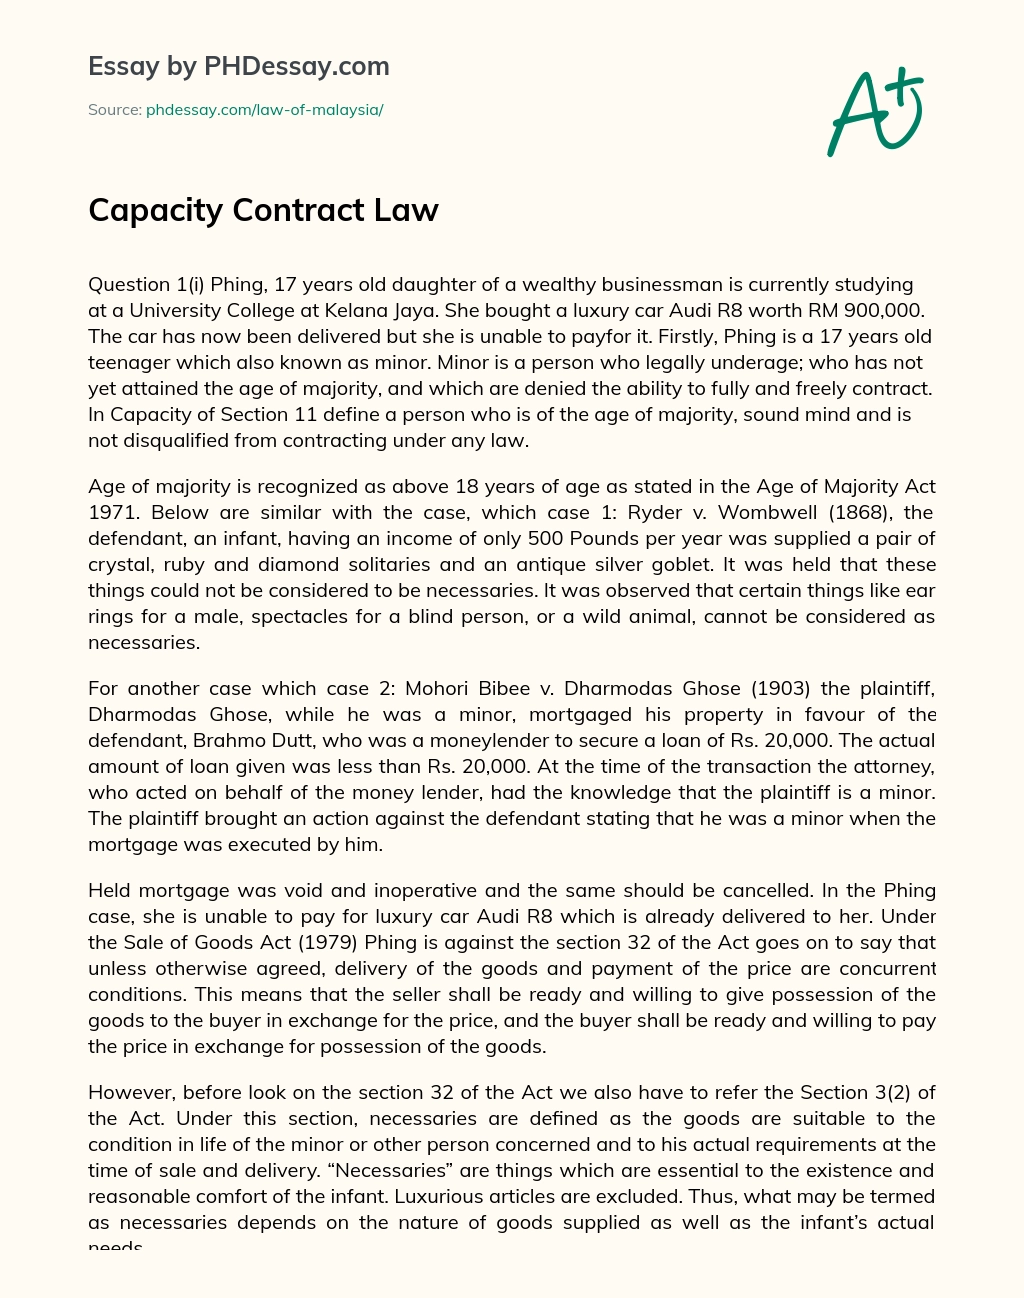 Capacity Contract Law essay